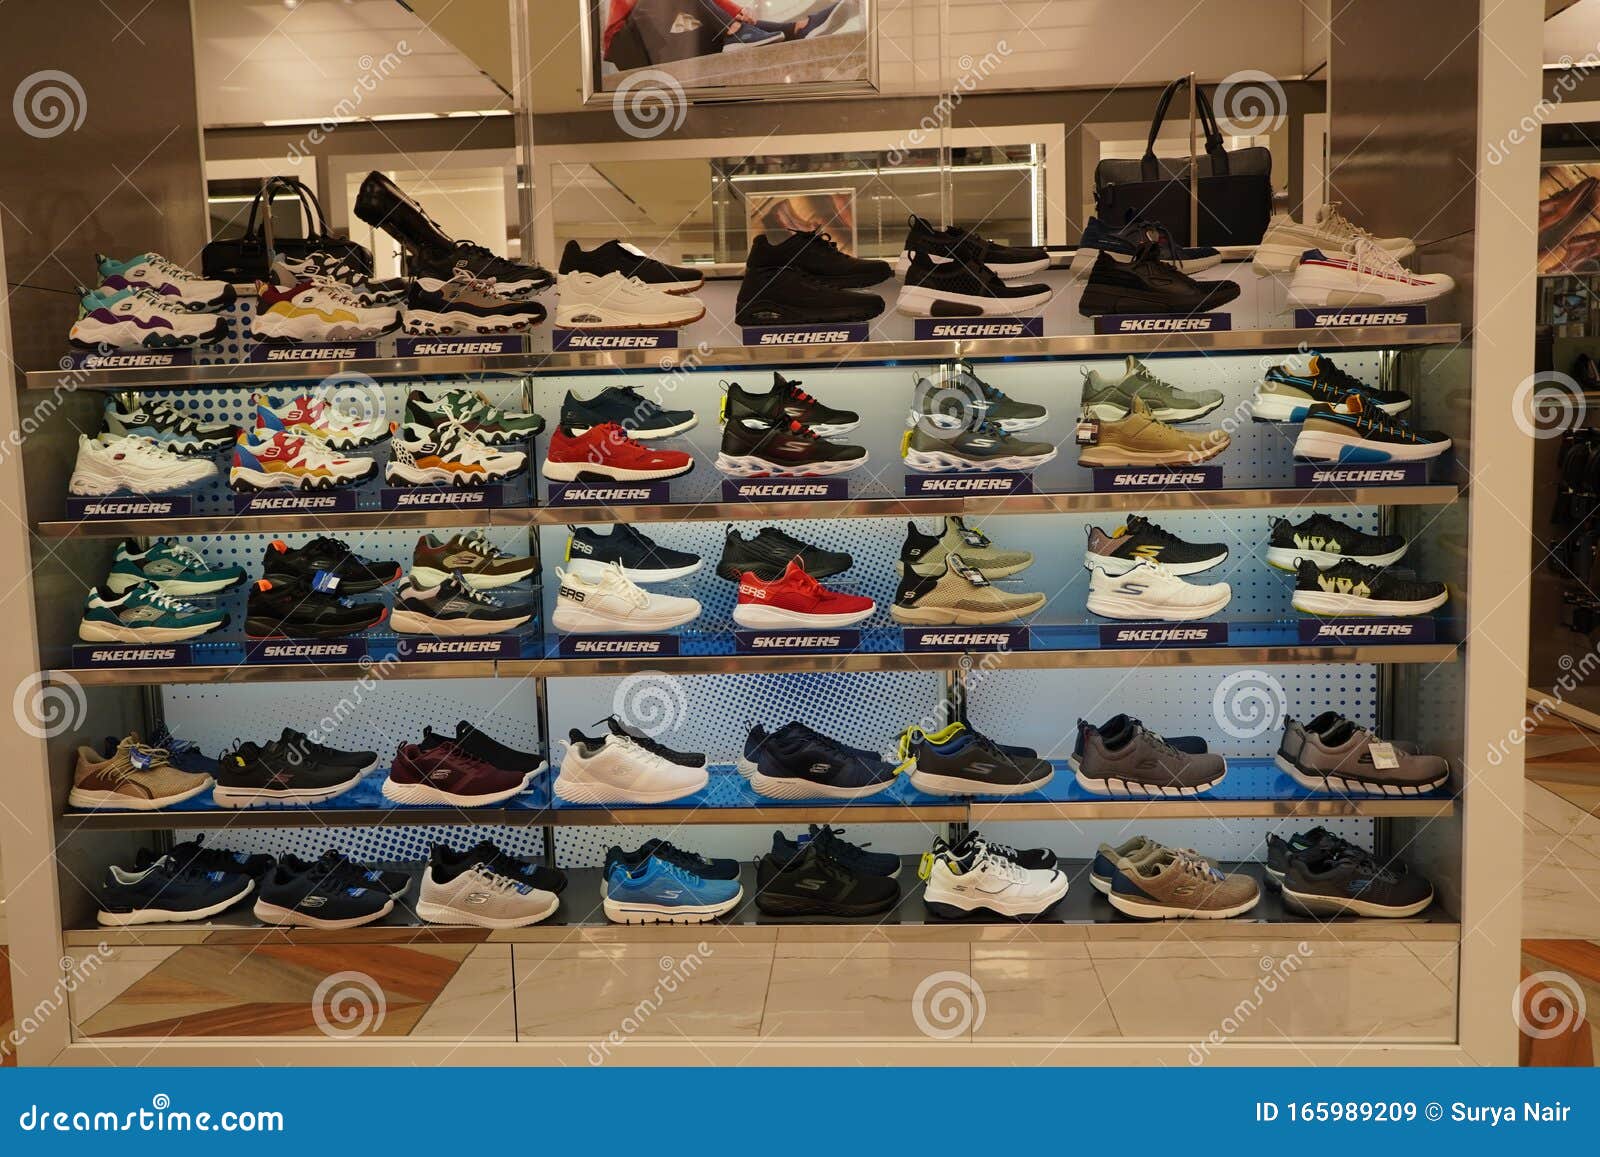 skechers shoes showroom in kolkata